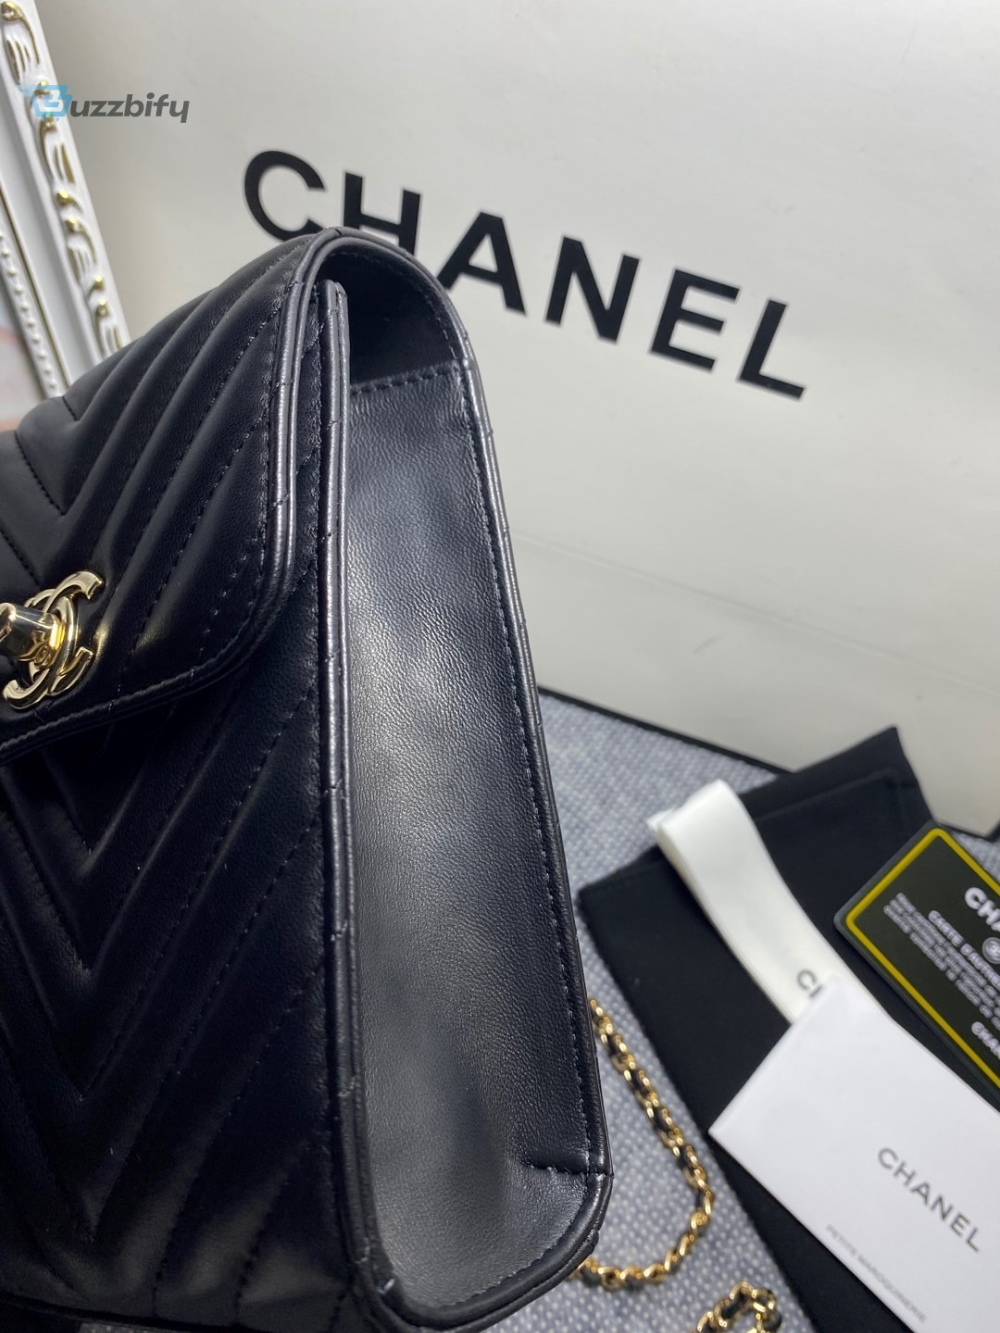 Chanel Chevron Trendy Cc Phone Black Bag For Women 18Cm7in - Buzzbify